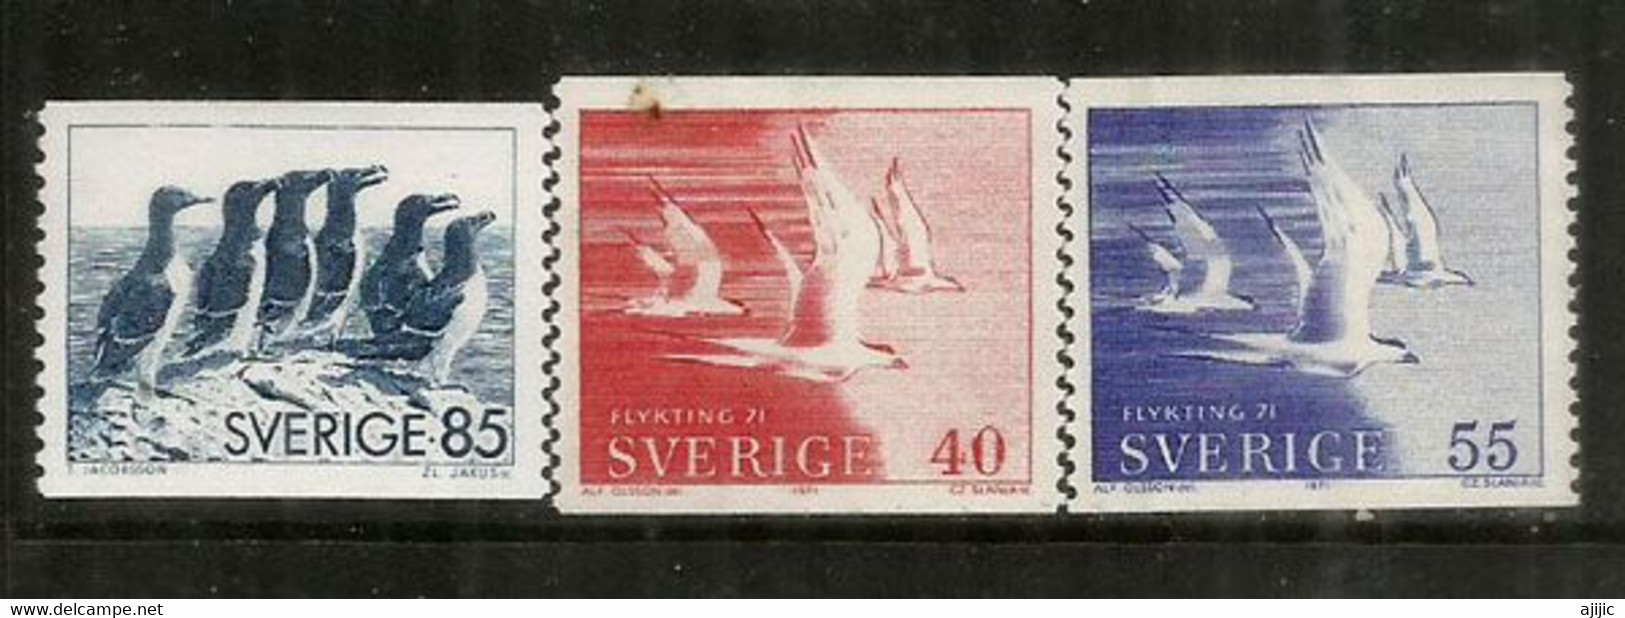 Pingouins Torda/Sternes Arctique/Arctic Terns/ Birds Refugee Relief. Sweden/ Suède.  3 Timbres Neufs ** - Arctic Wildlife